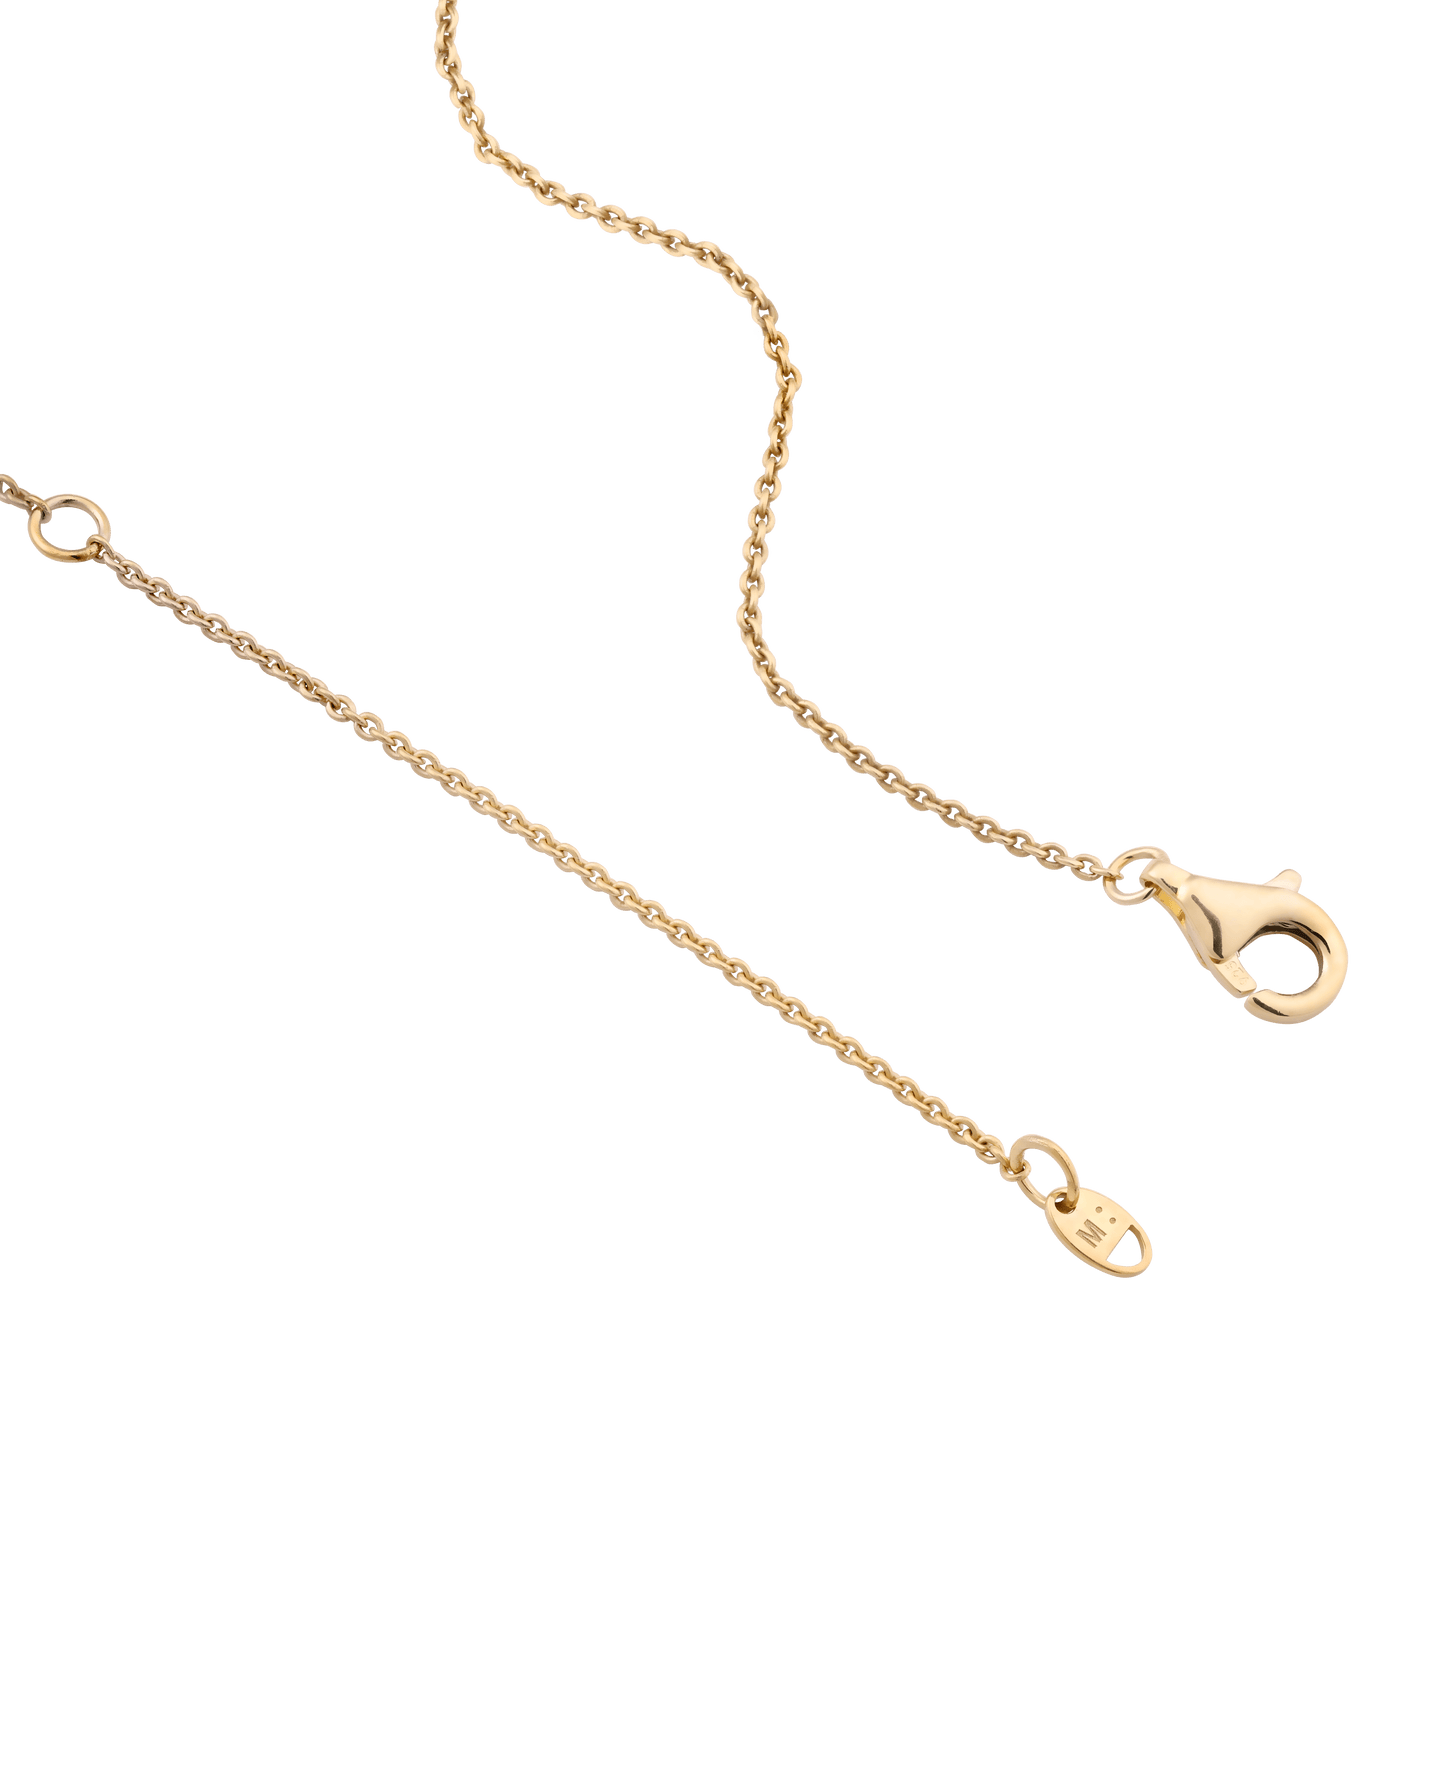 Pear Solitaire Diamond Bracelet - 14K White Gold Bracelets magal-dev 